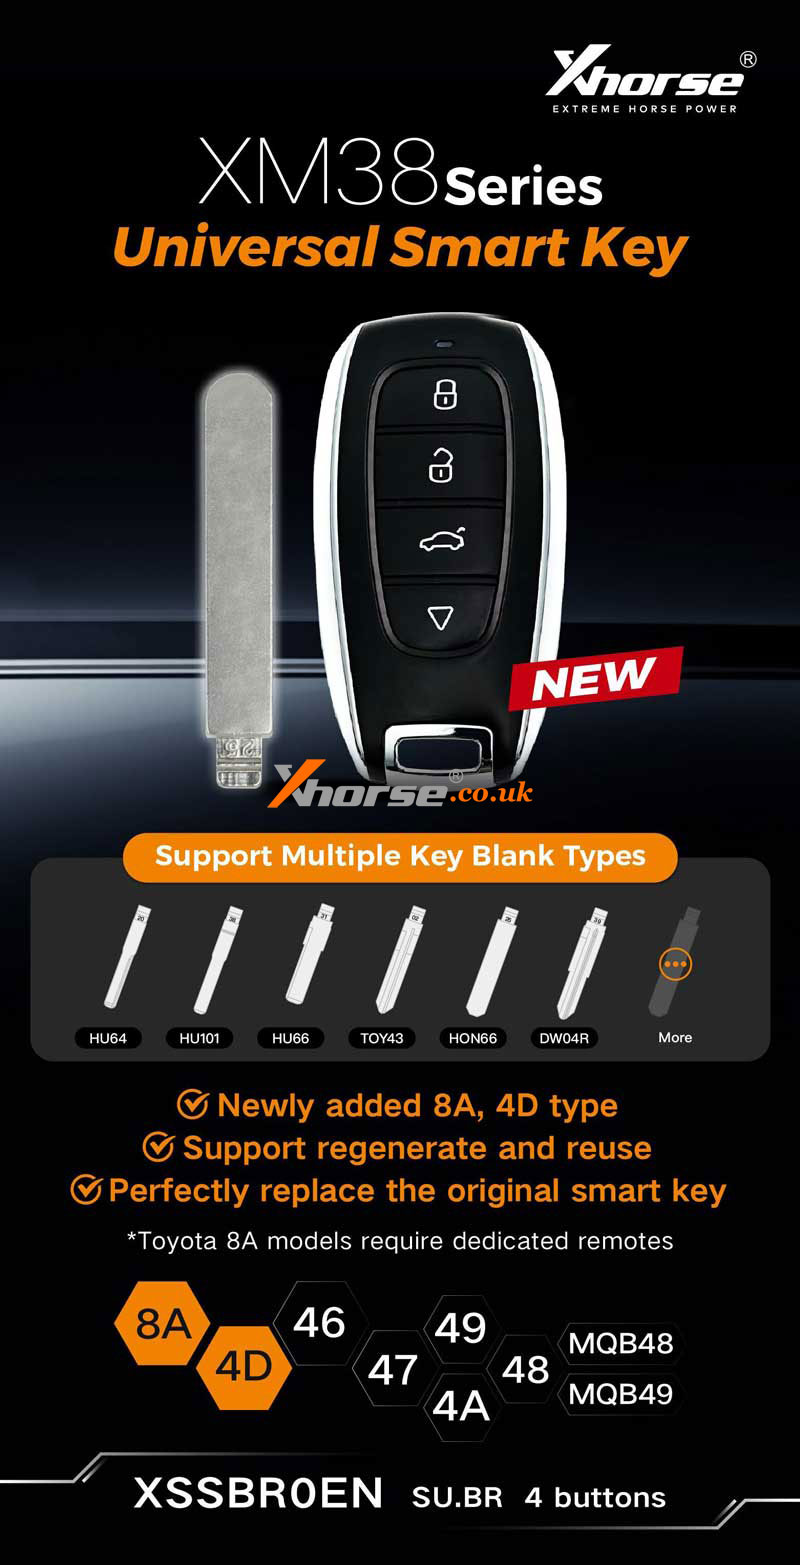 Xhorse Xz Xs Xm38 Series Smart Key New Released (3)